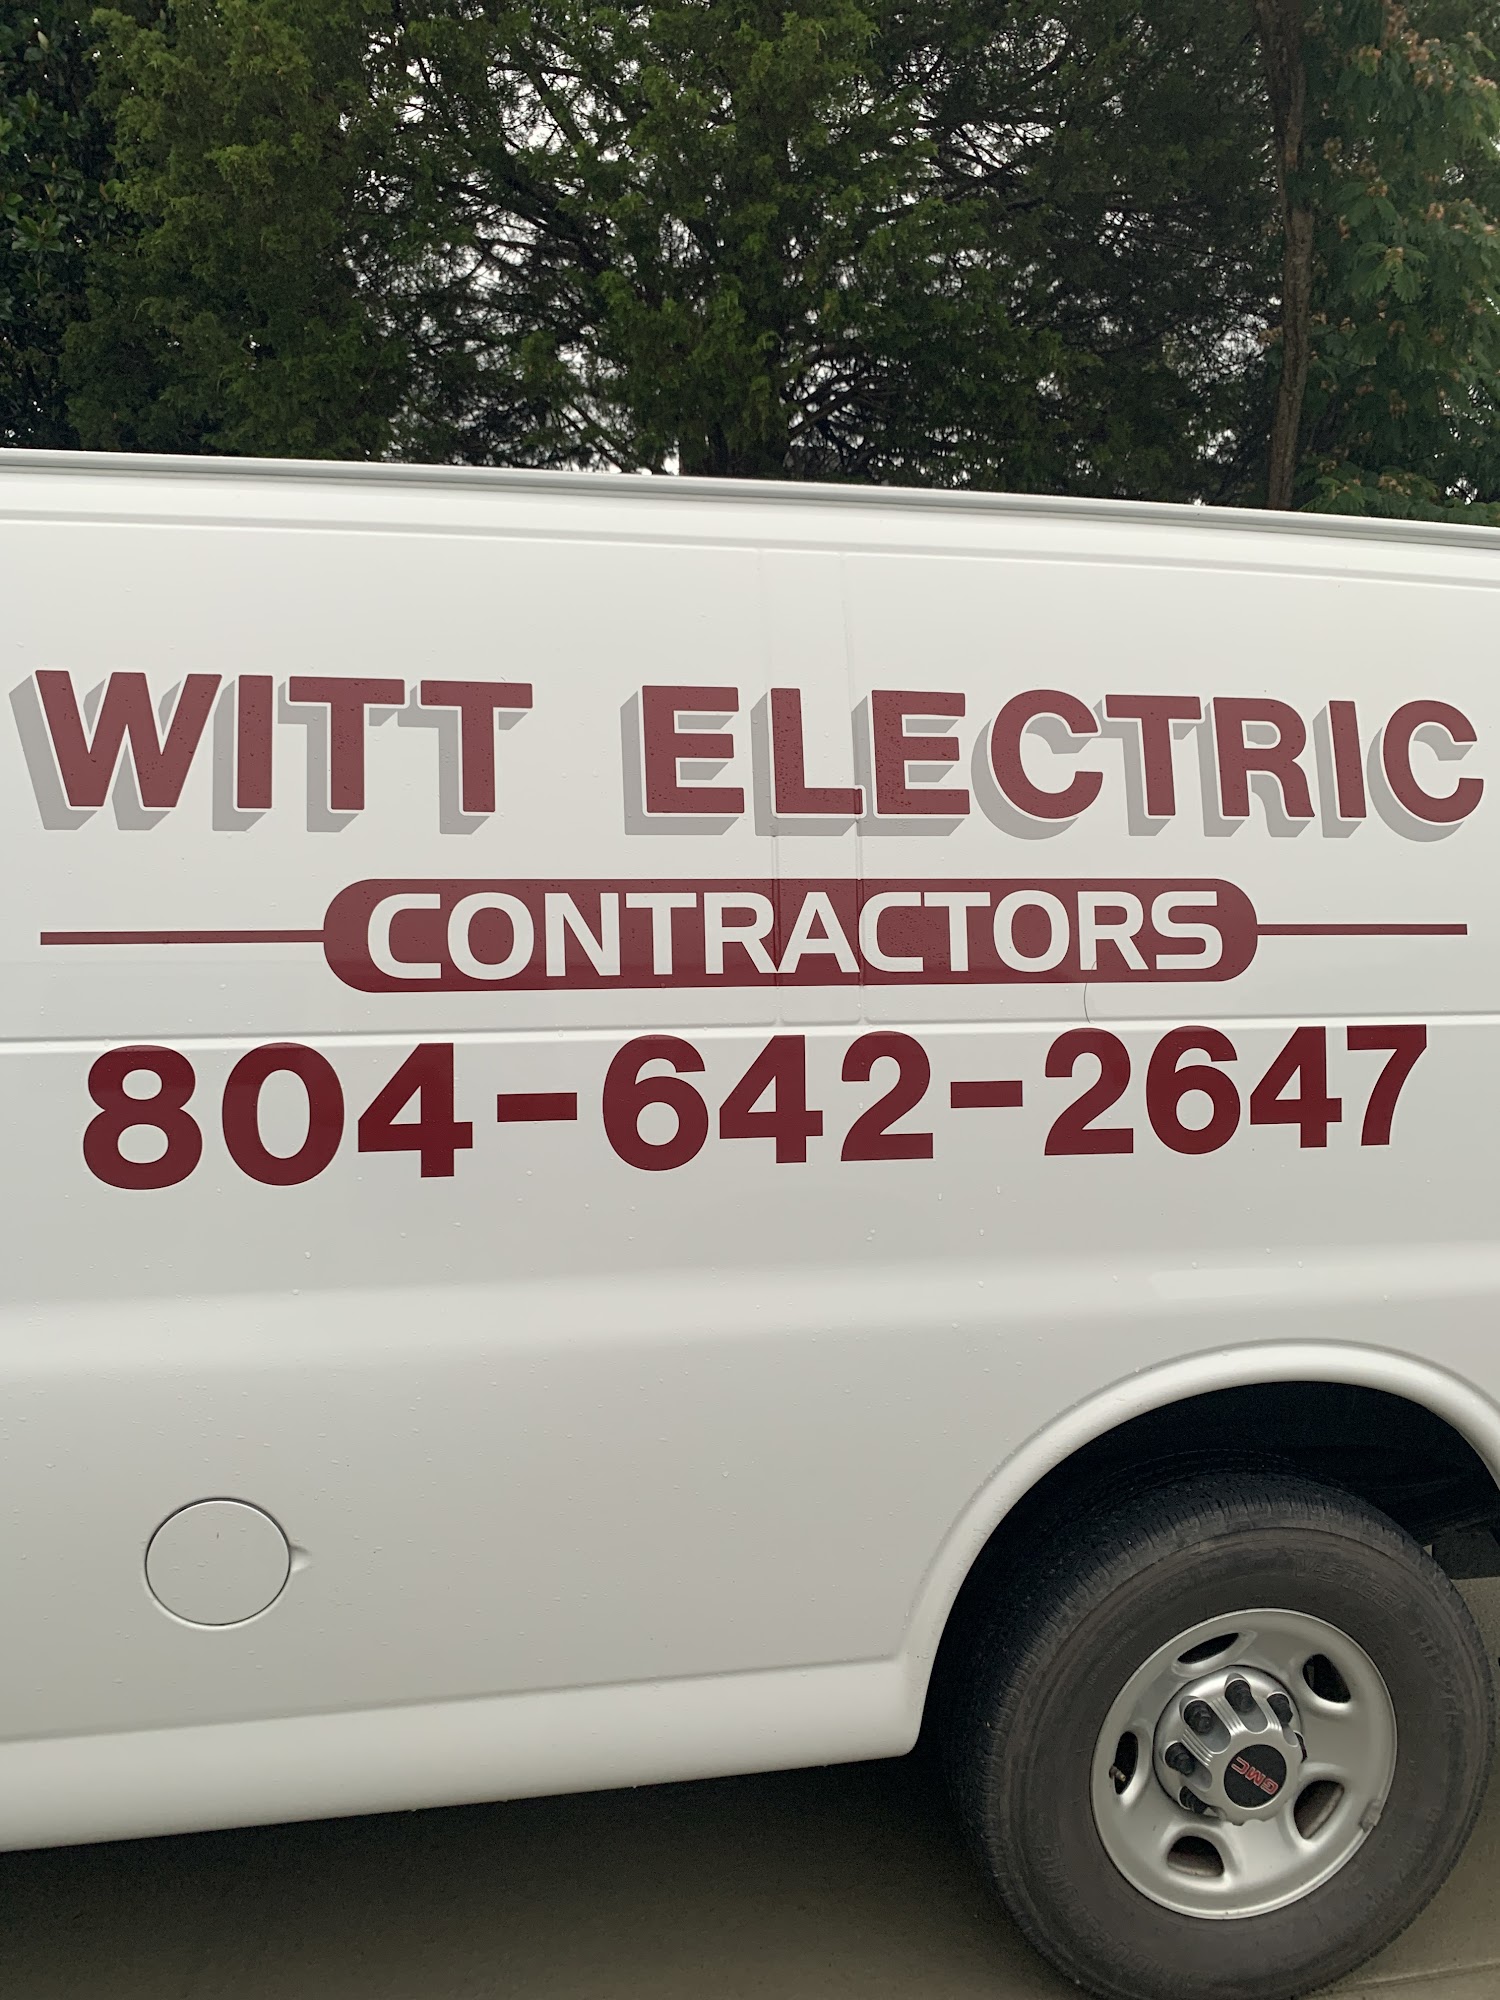 Witt Electric Co